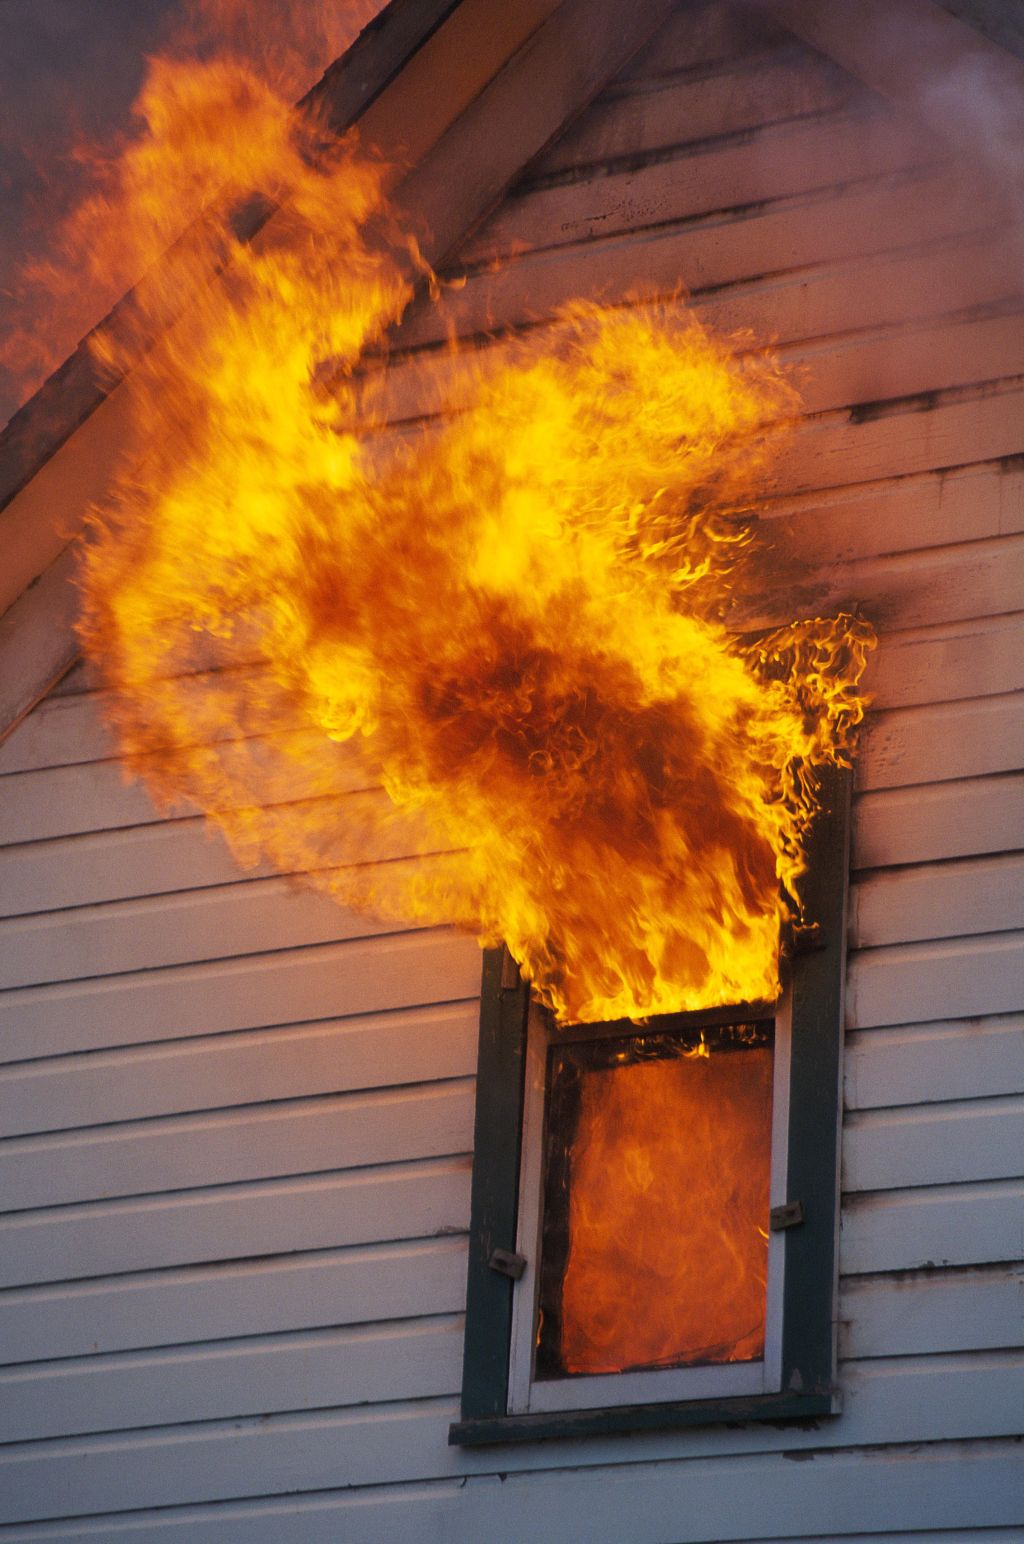 House burning, flames shooting through window